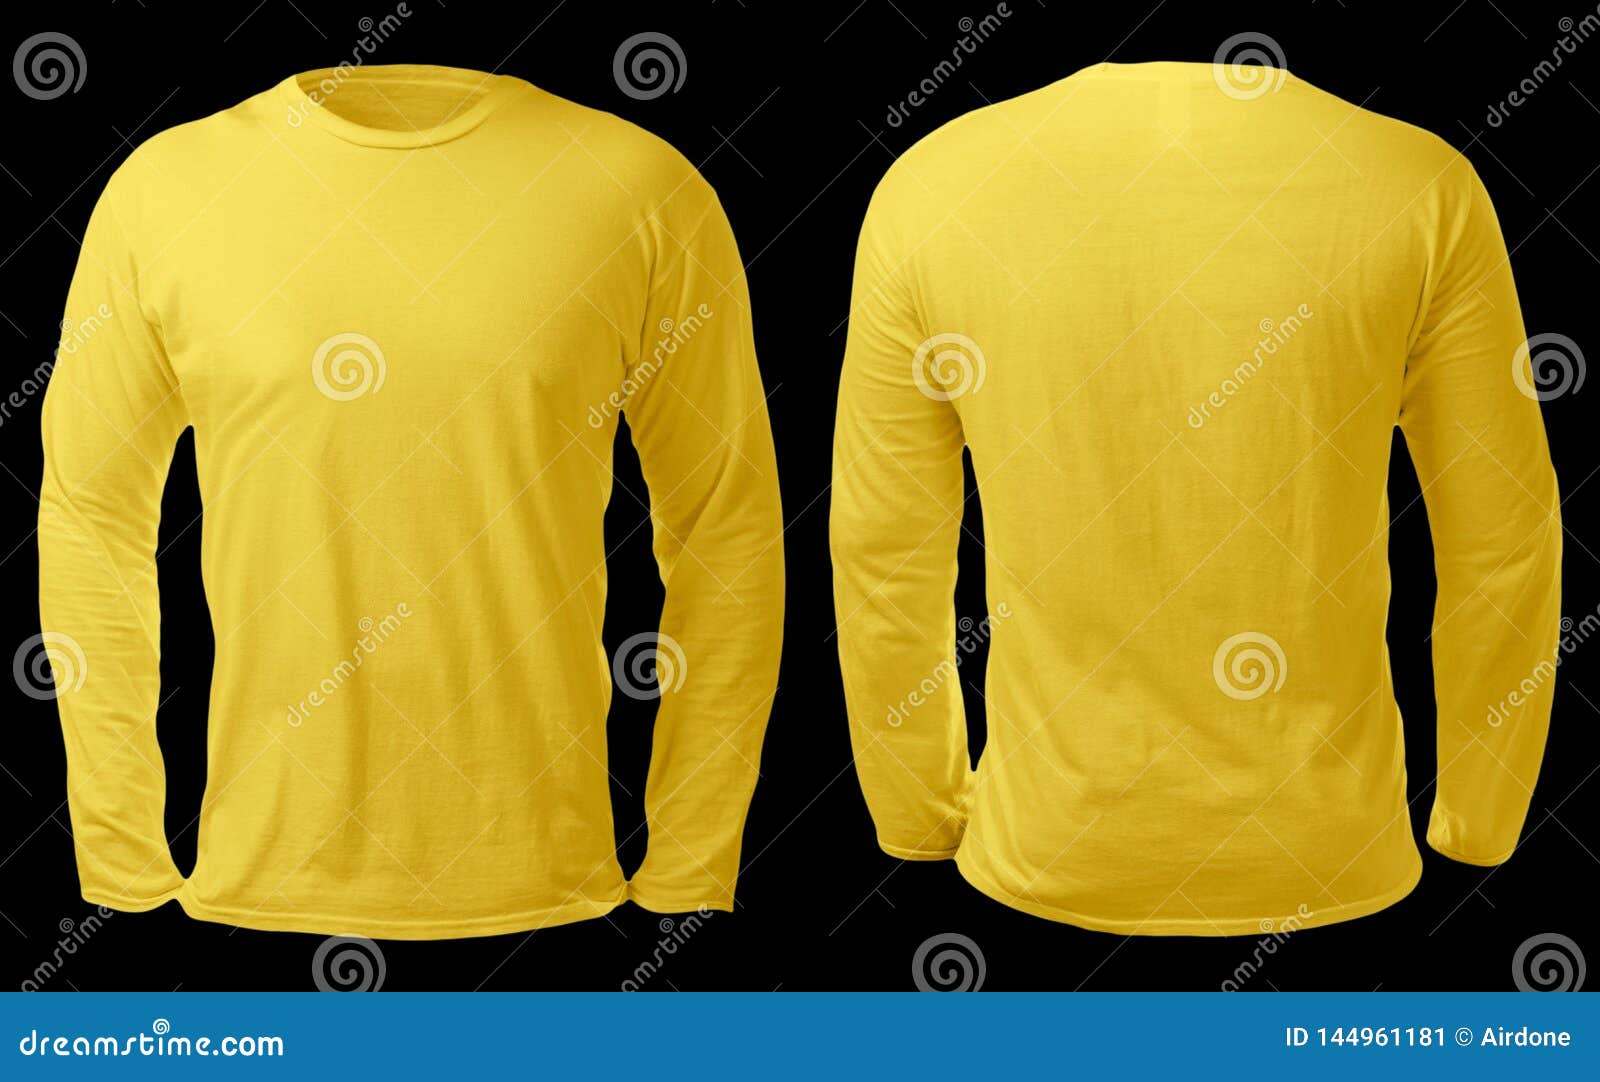 Bendecida en Ingles Adult Unisex Shirt Blessed Camisa Unisexo para Adultos